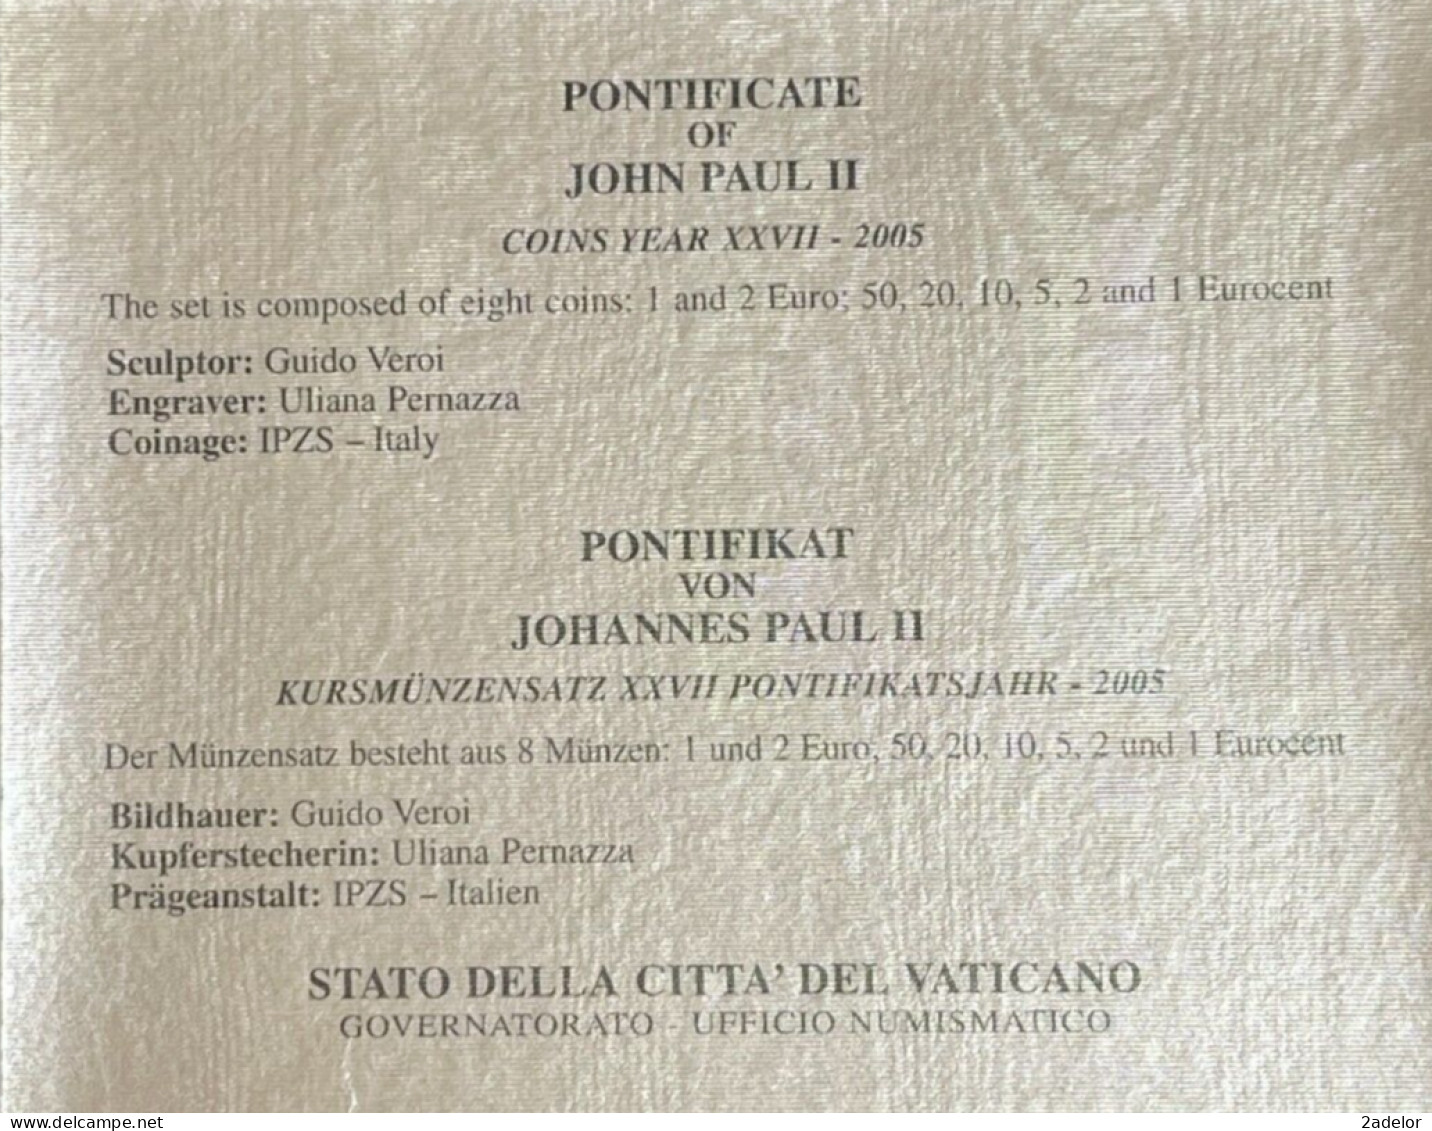 Coffret BU euros commémoratif VATICAN 2005, Pontificat de Jean-Paul II